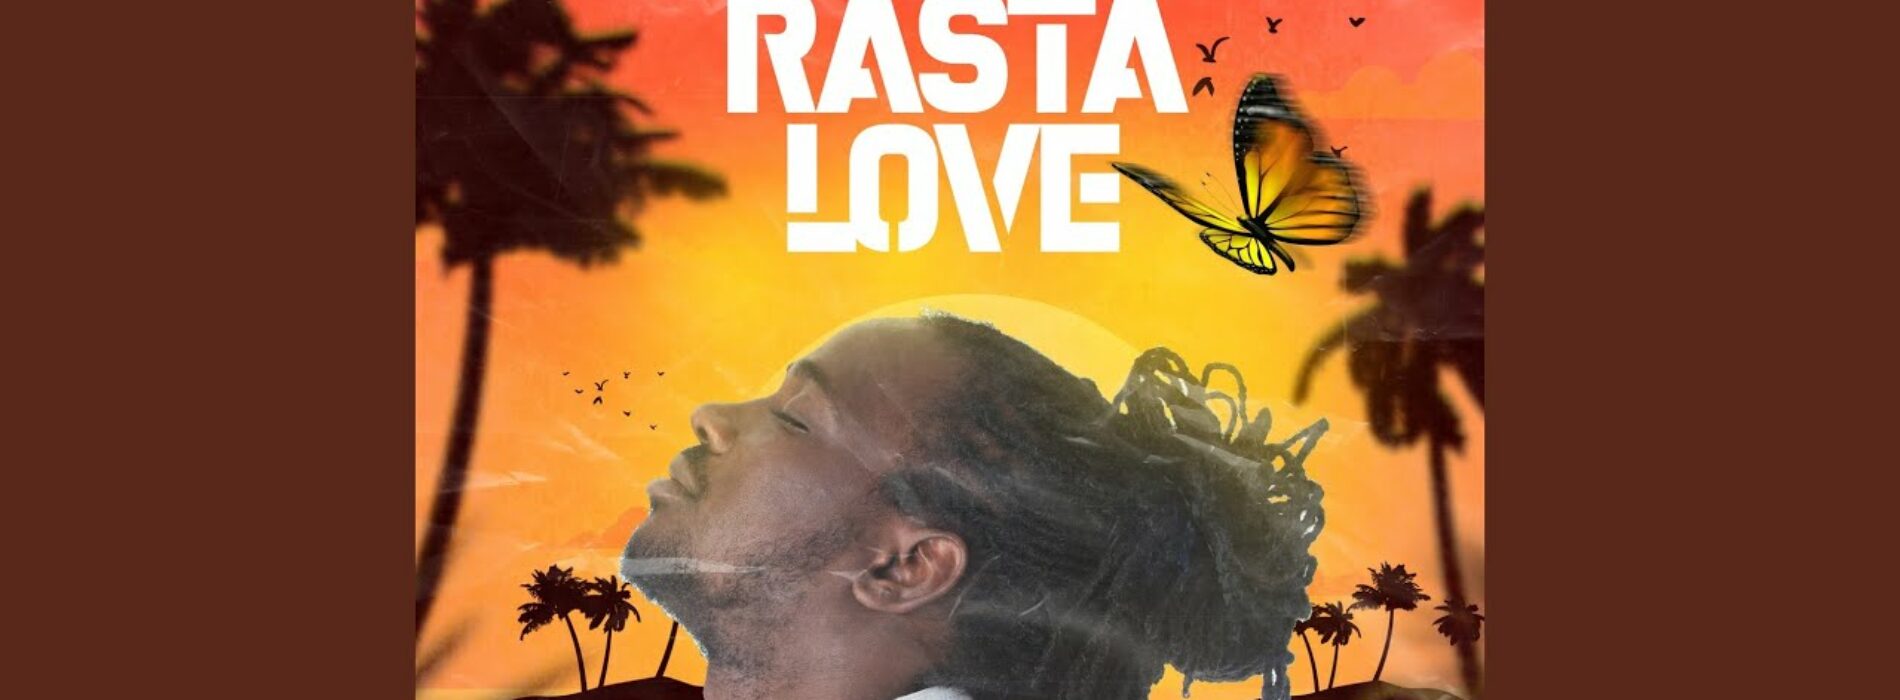 I-Octane – Rasta Love (Official Video) – Juillet 2021